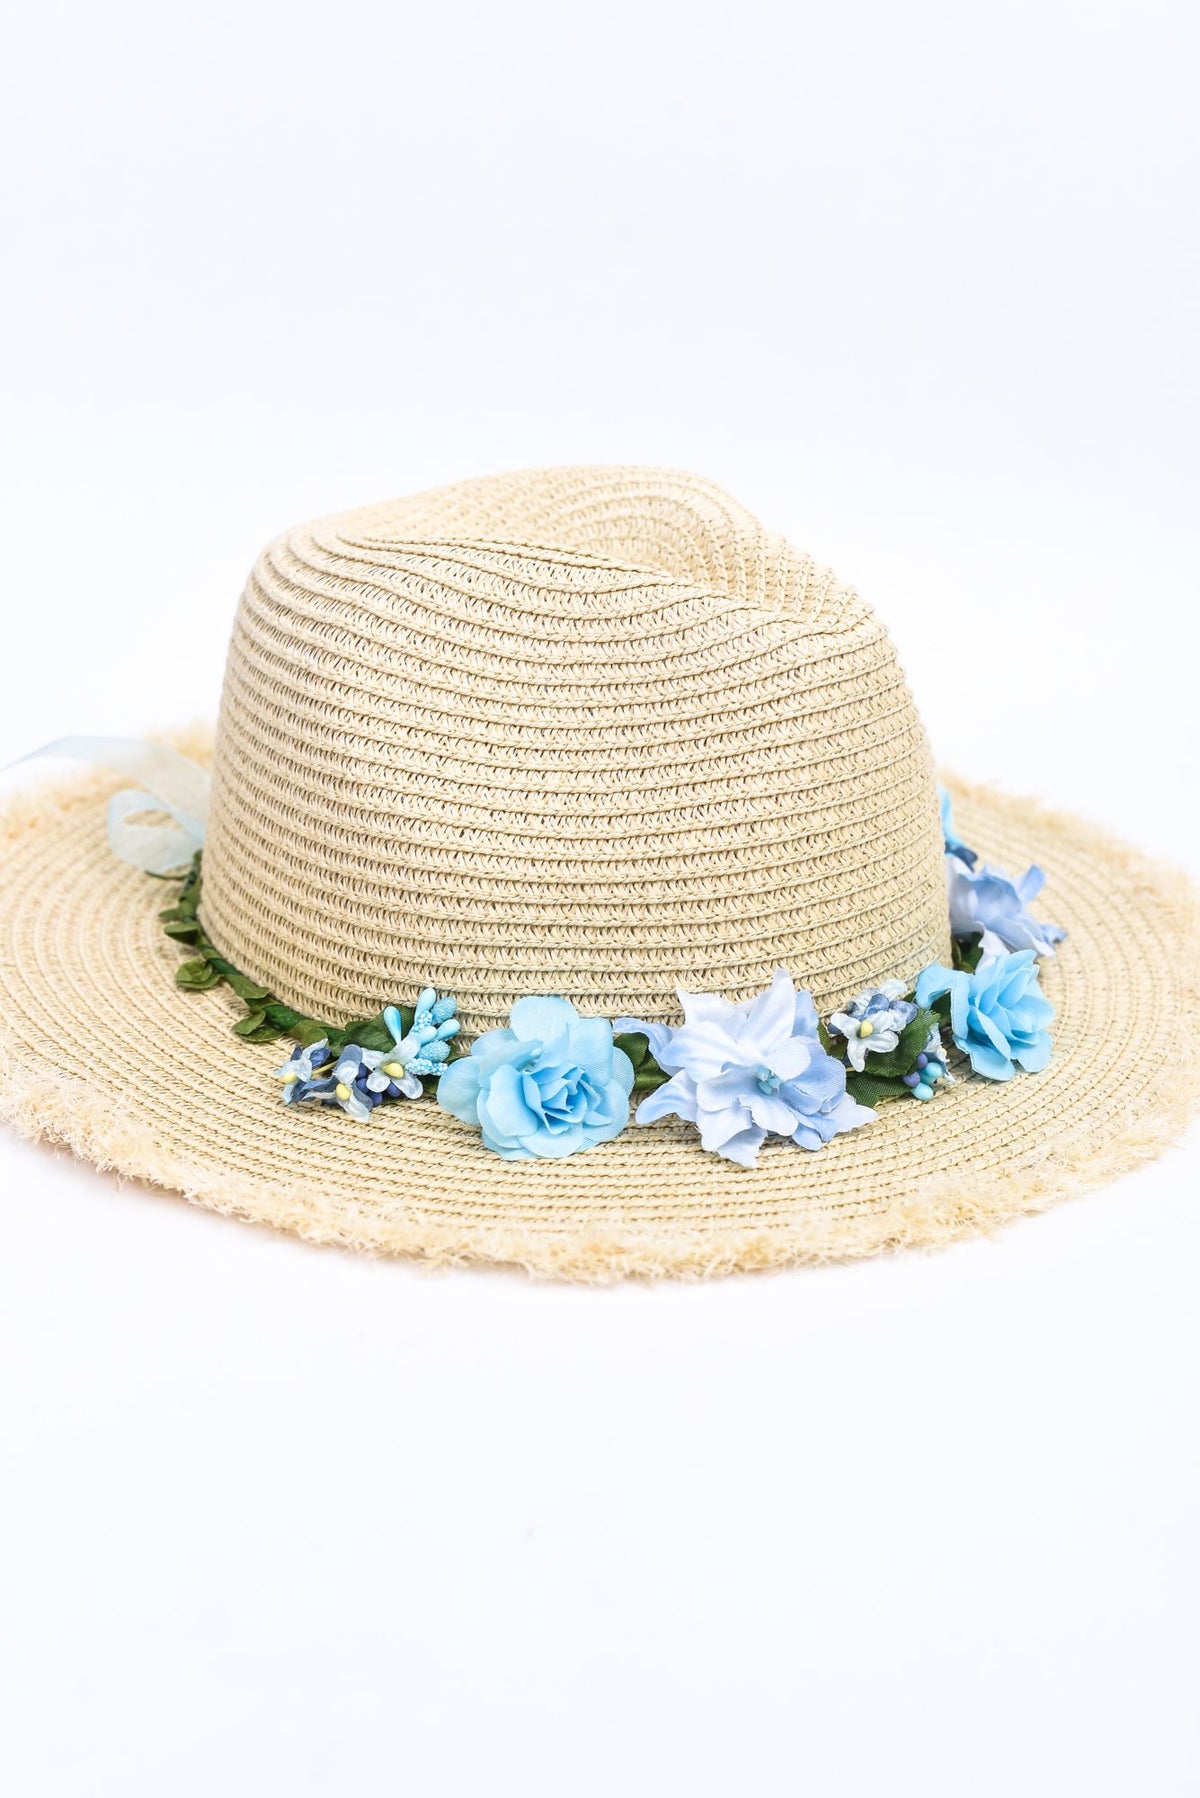 Beige/Blue Floral Floppy Fedora Hat - HAT1237BG